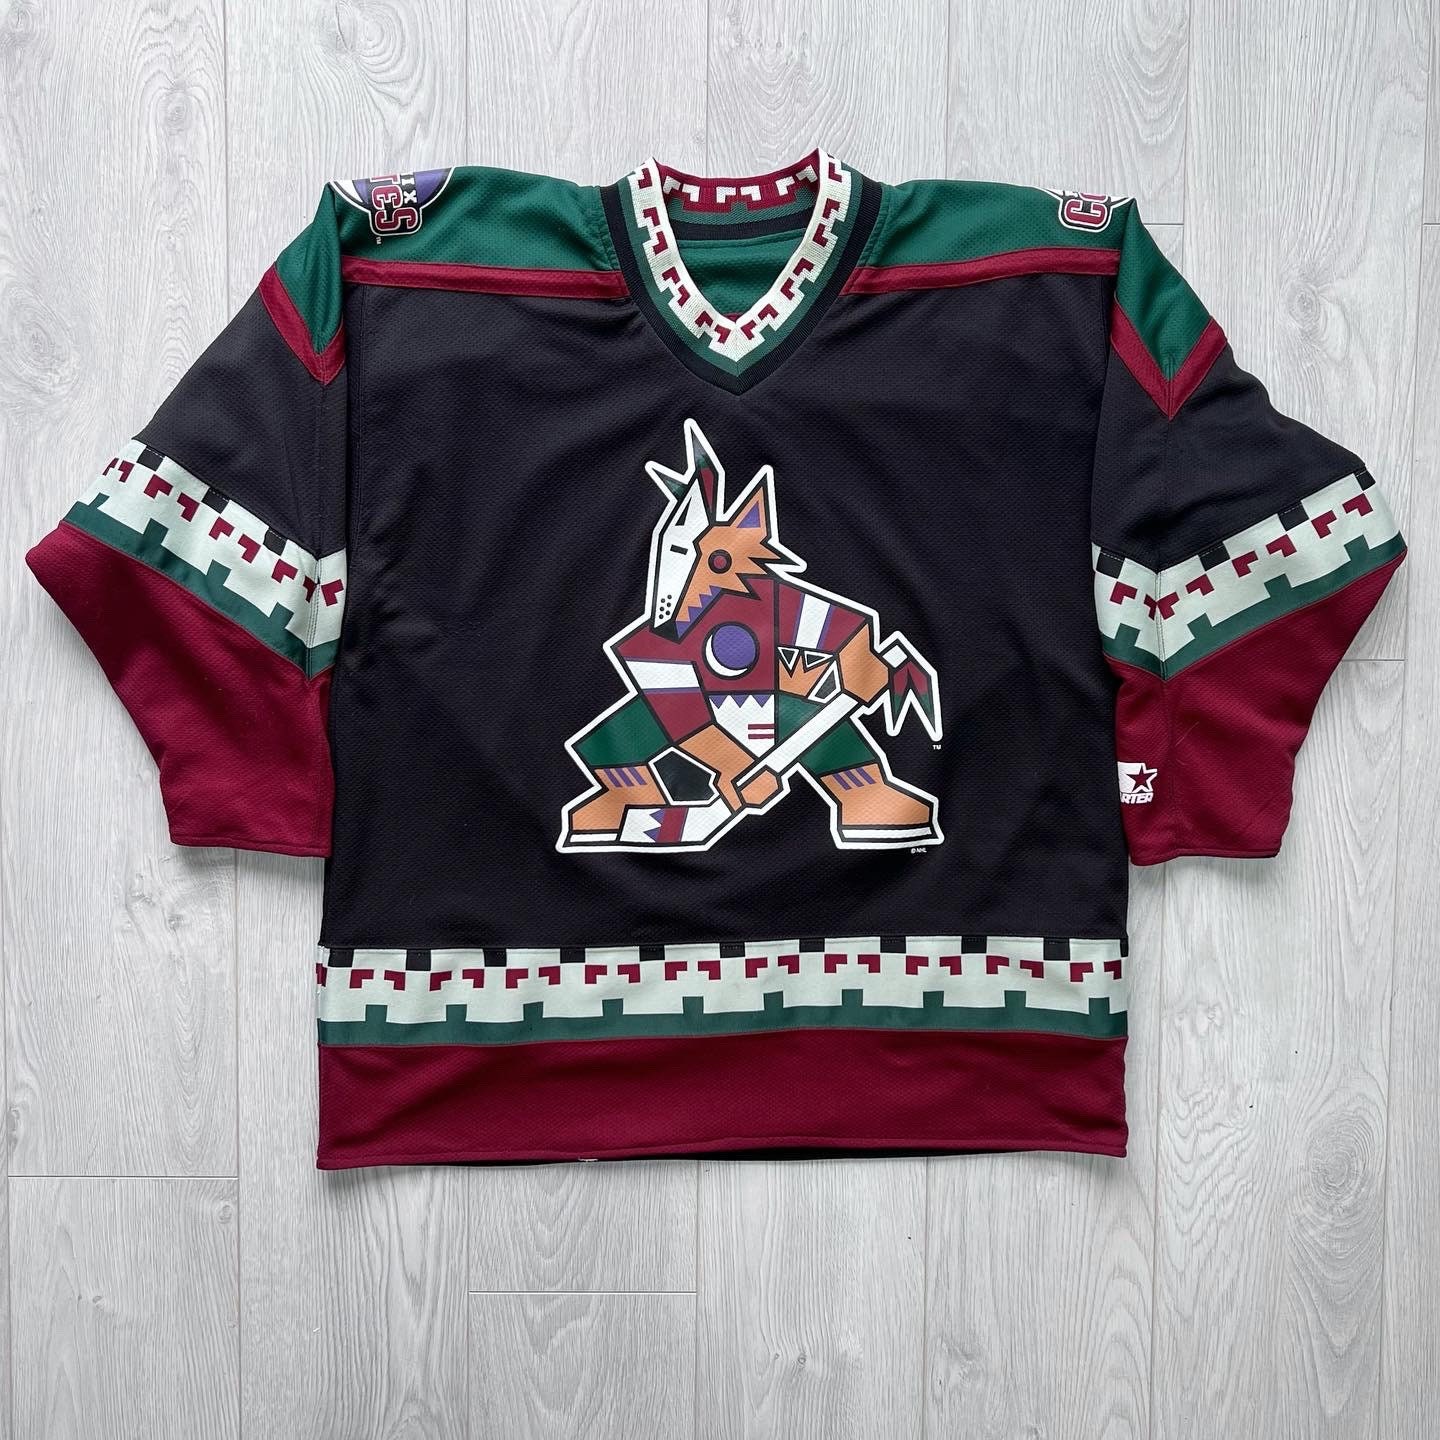 Phoenix coyote jersey!  Hockey sweater, Nhl playoffs, Coyotes hockey